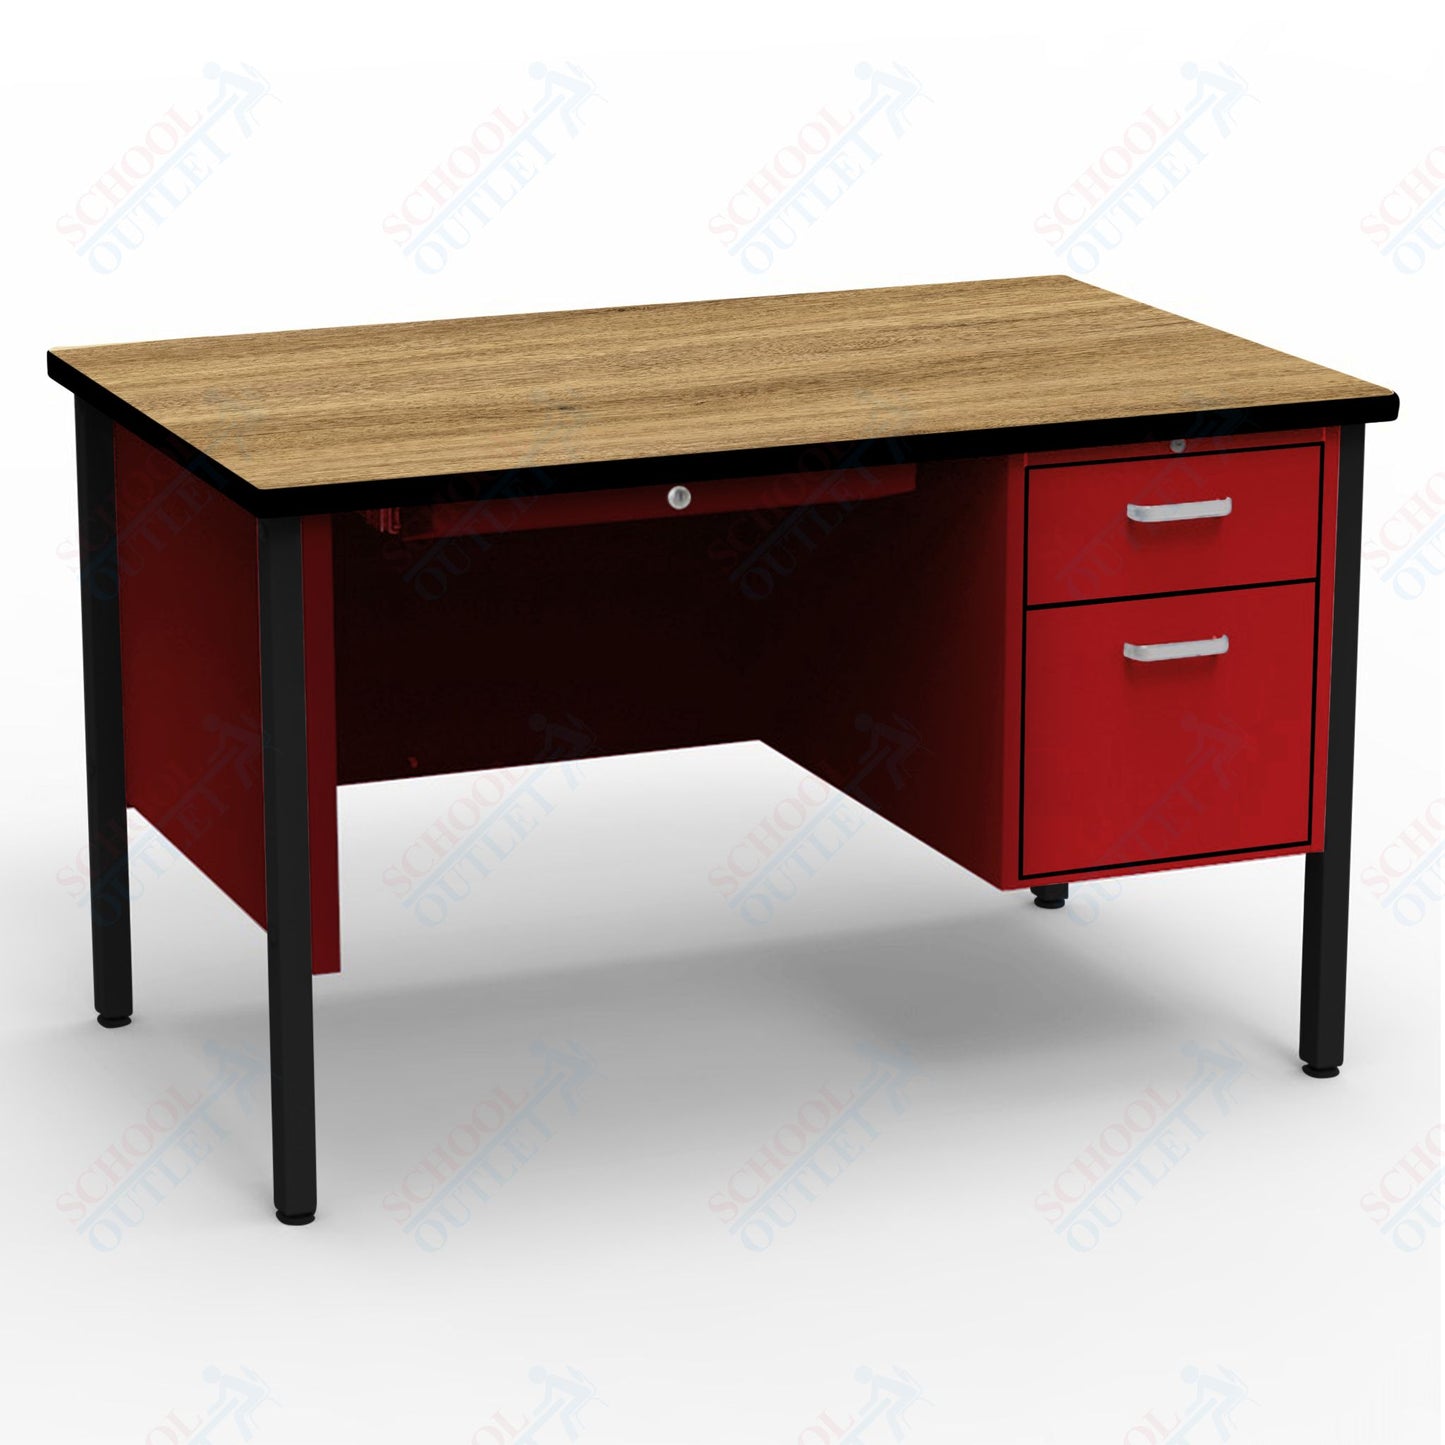 Virco 643 Single Pedestal Teacher Desk - 640 Series with a 30"D x 48"L High-pressure Laminate Surface